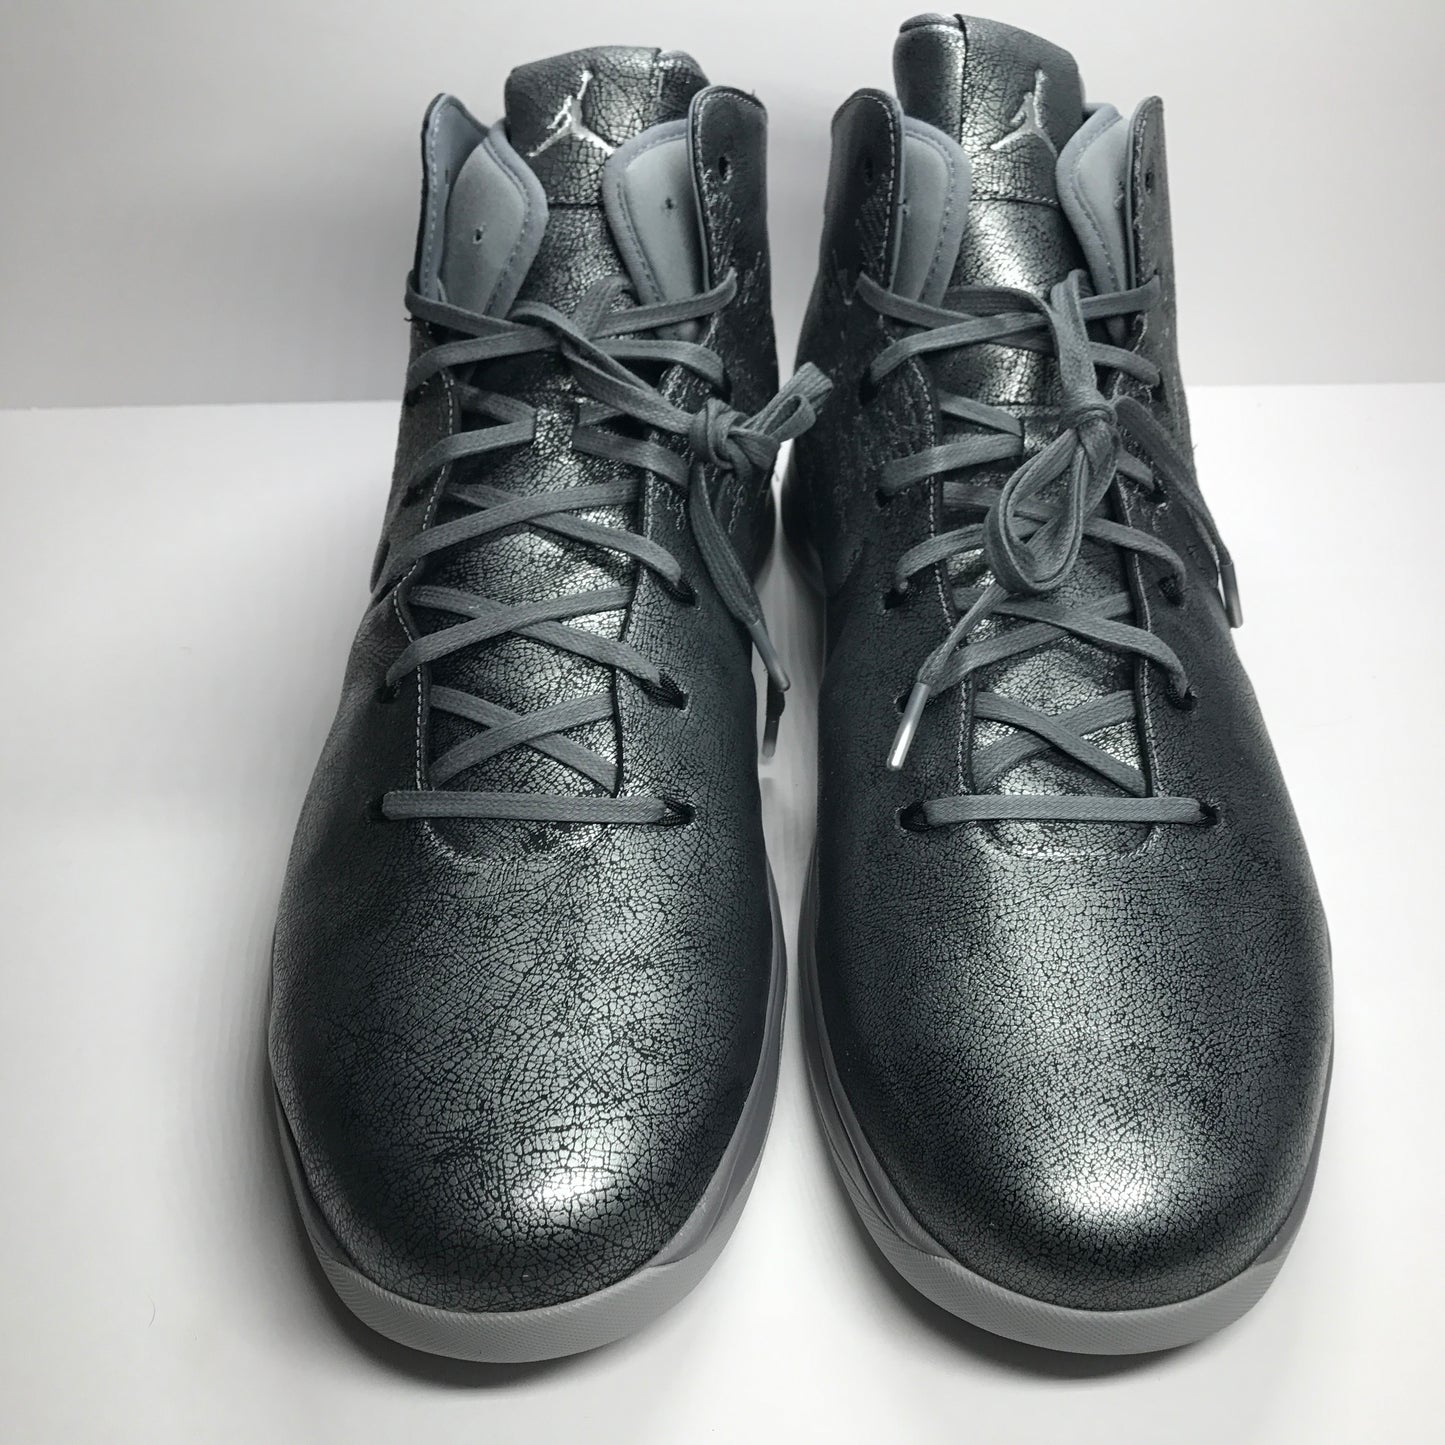 DS Nike Air Jordan 31 XXXI Tamaño de muestra promocional 18.5